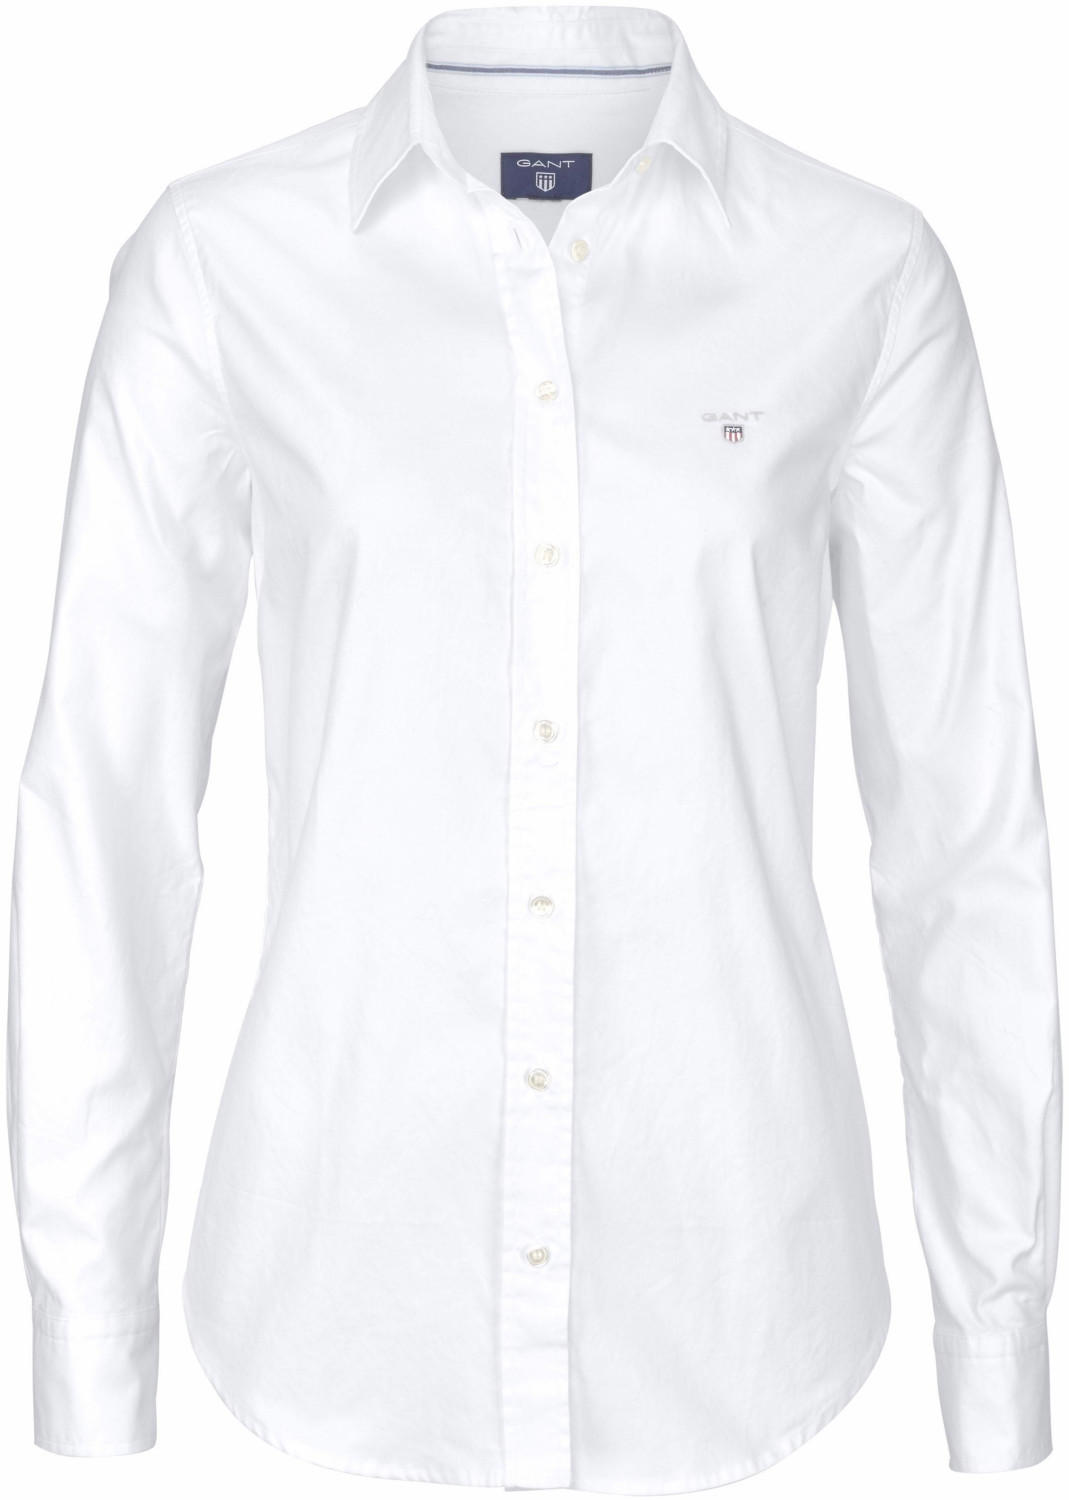 GANT Stretch Oxford Shirt white (432681-110)